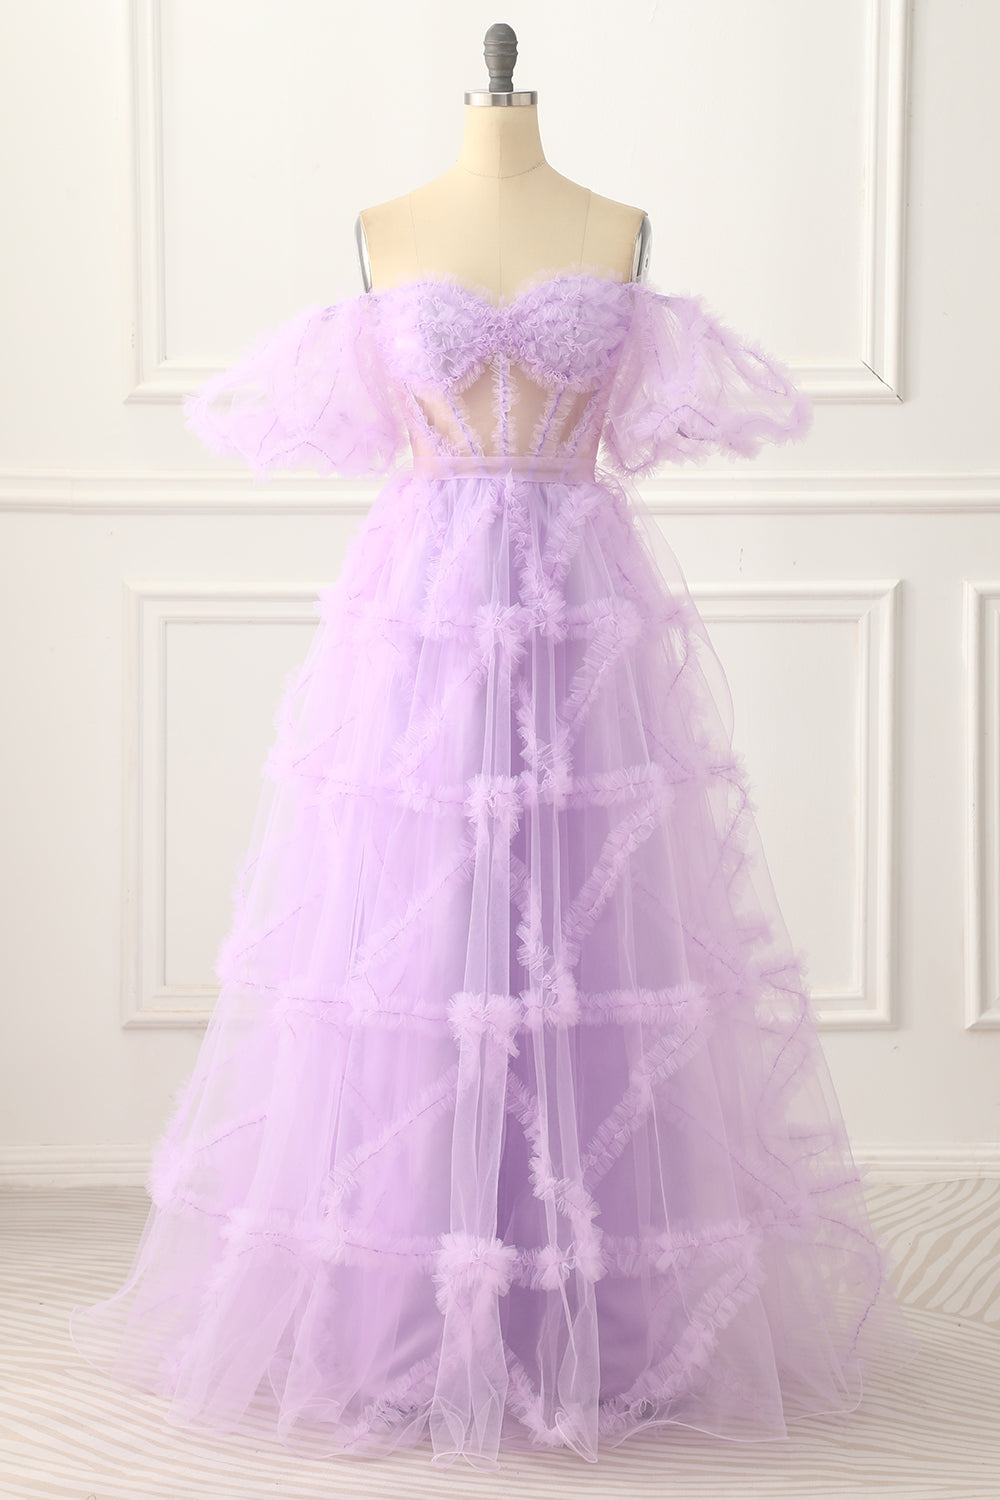 Party Dress Short, Off the Shoulder A-line Tulle Lavender Prom Dress